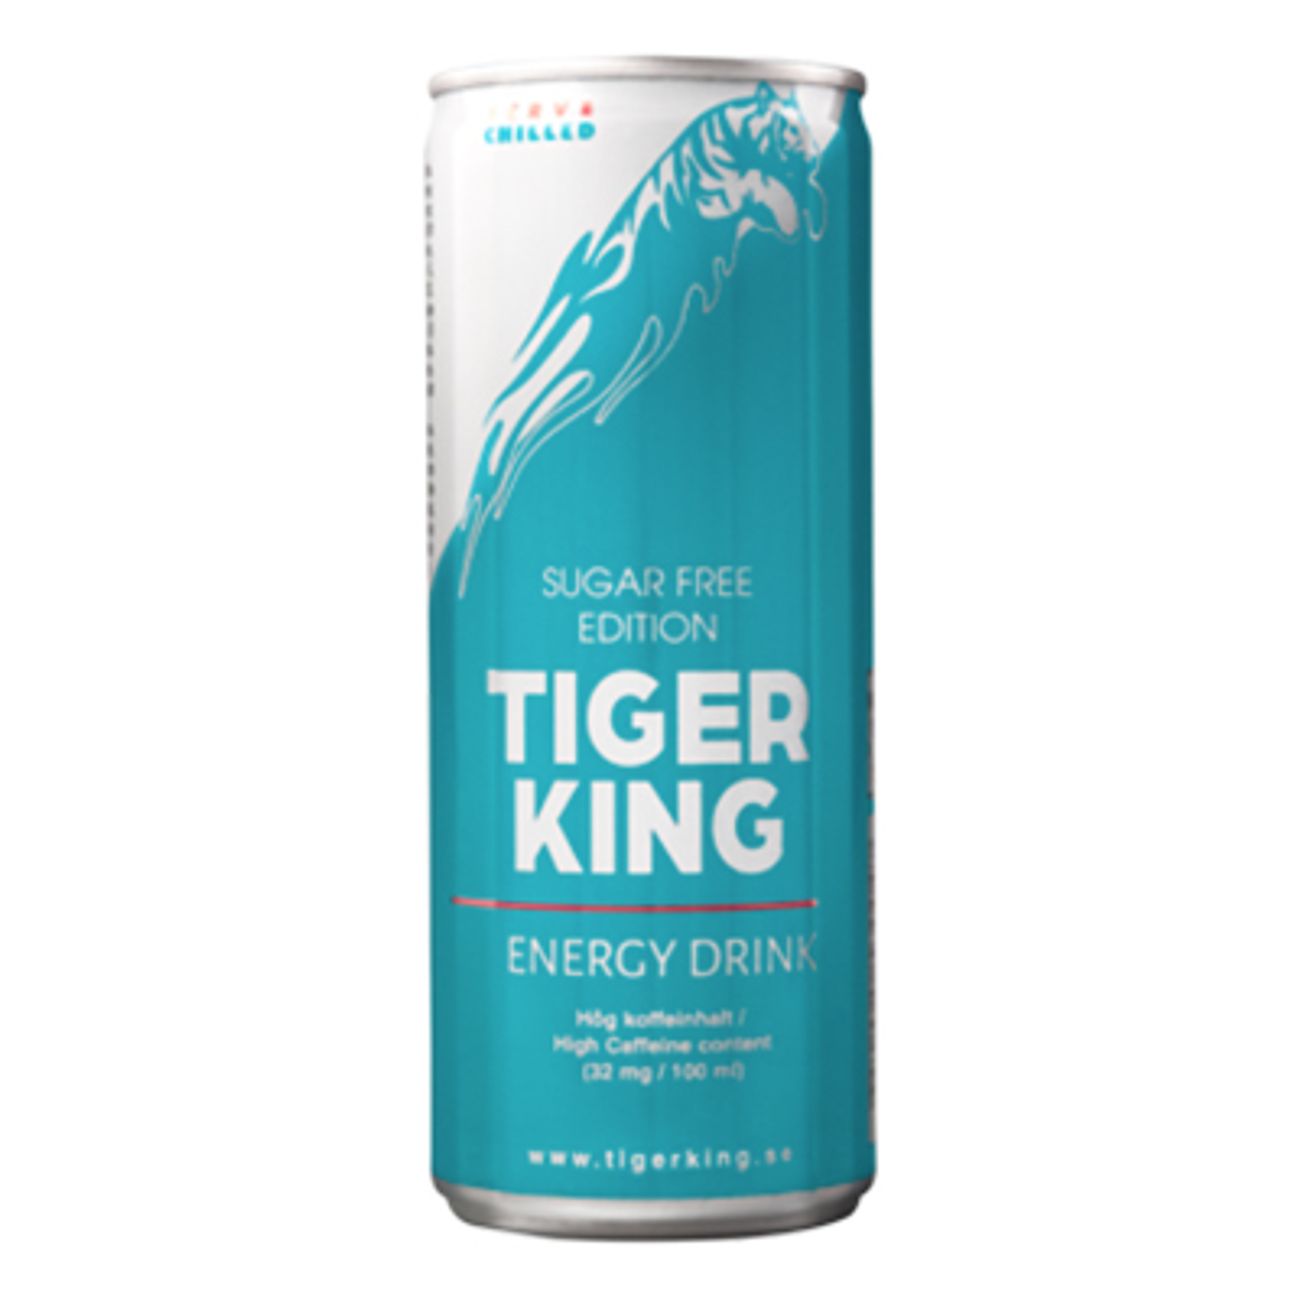 tiger-king-sockerfri-1